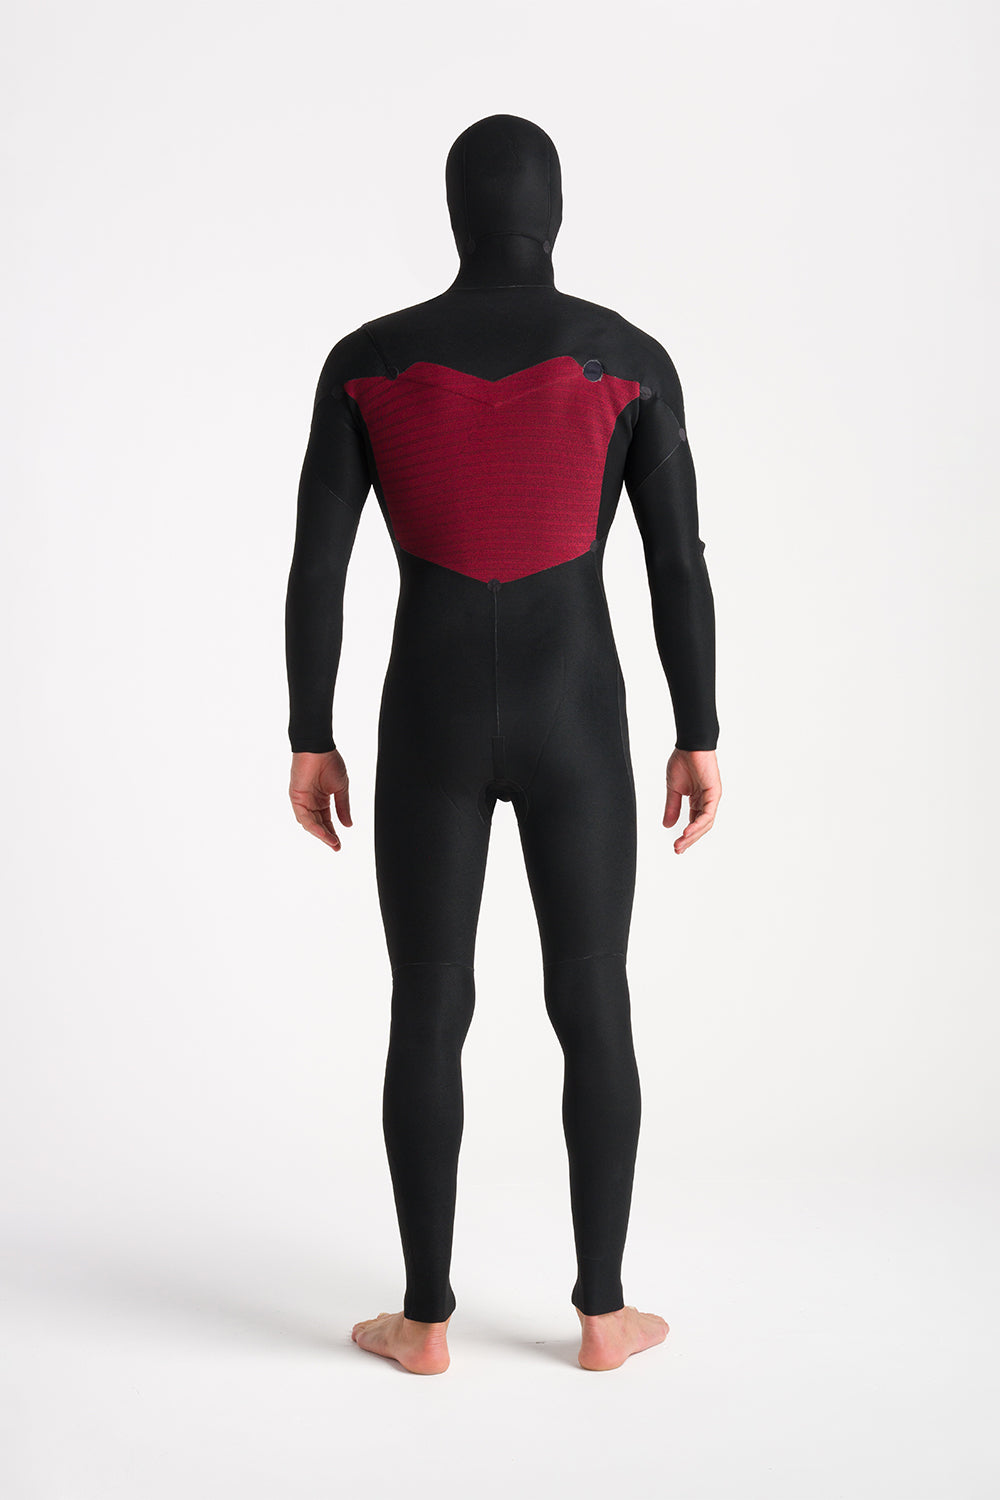 c-skins-session-5-4-hooded-winter-wetsuit-men-halo-x-x-tend-tape-inside-back